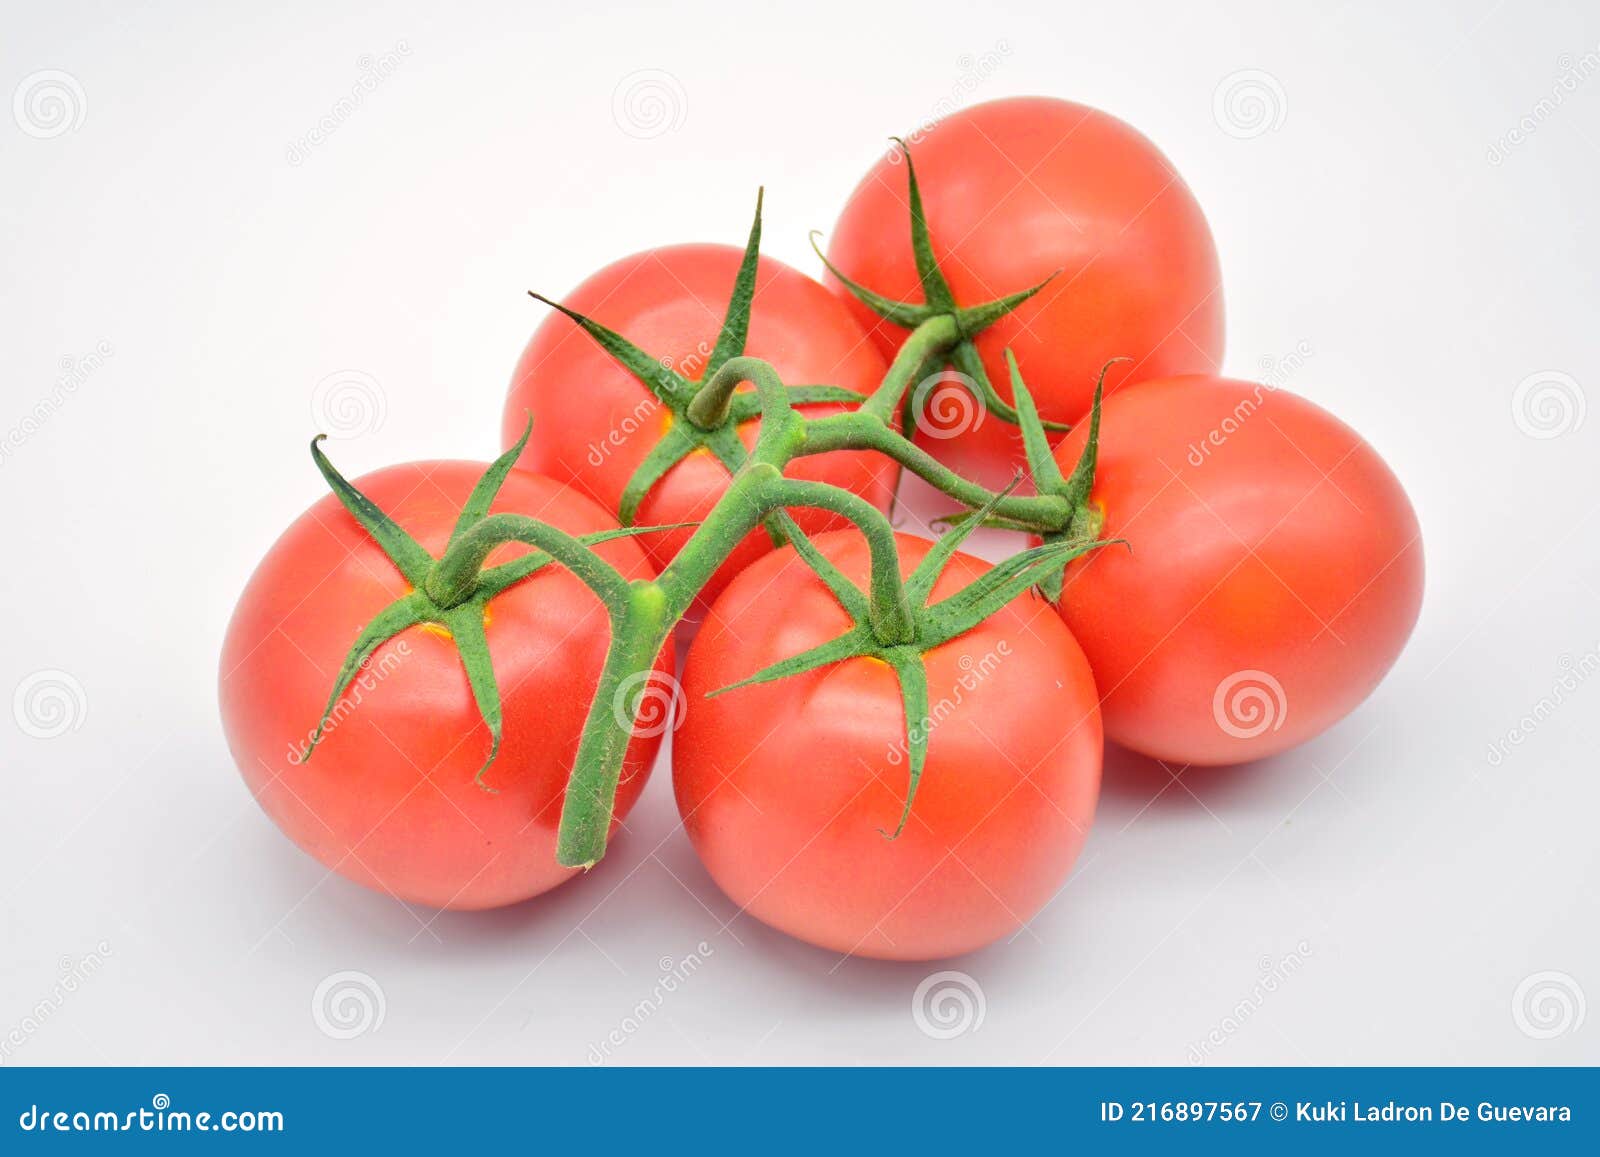 freshly cut vine tomatoes